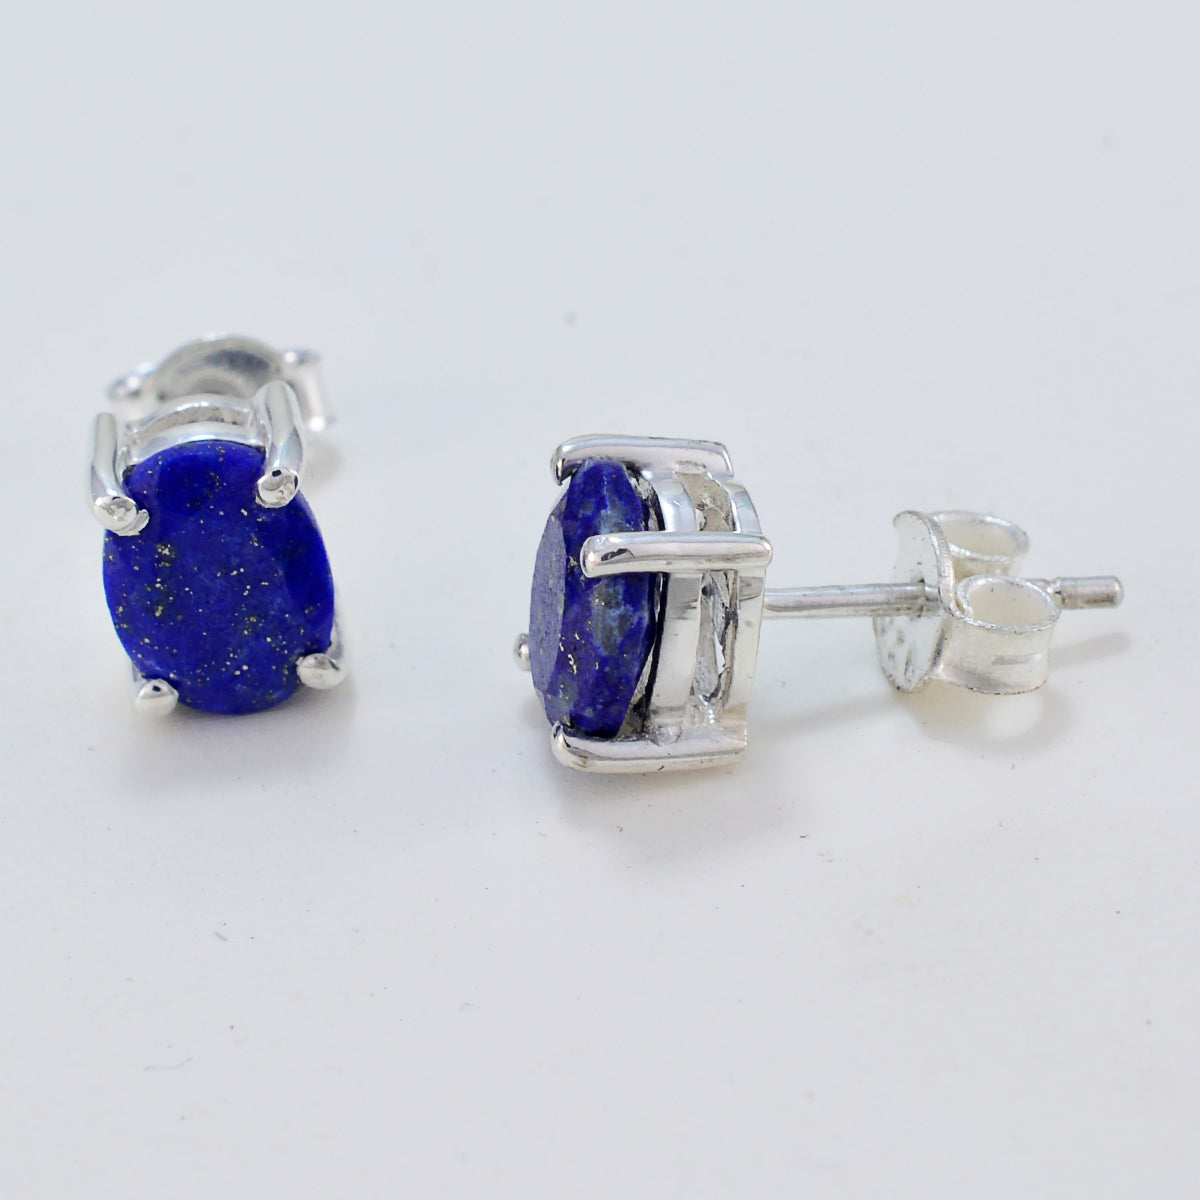 Riyo Hinreißender 925er Sterlingsilber-Ohrring für Damen, Lapislazuli-Ohrring, Lünettenfassung, blauer Ohrring, Ohrstecker